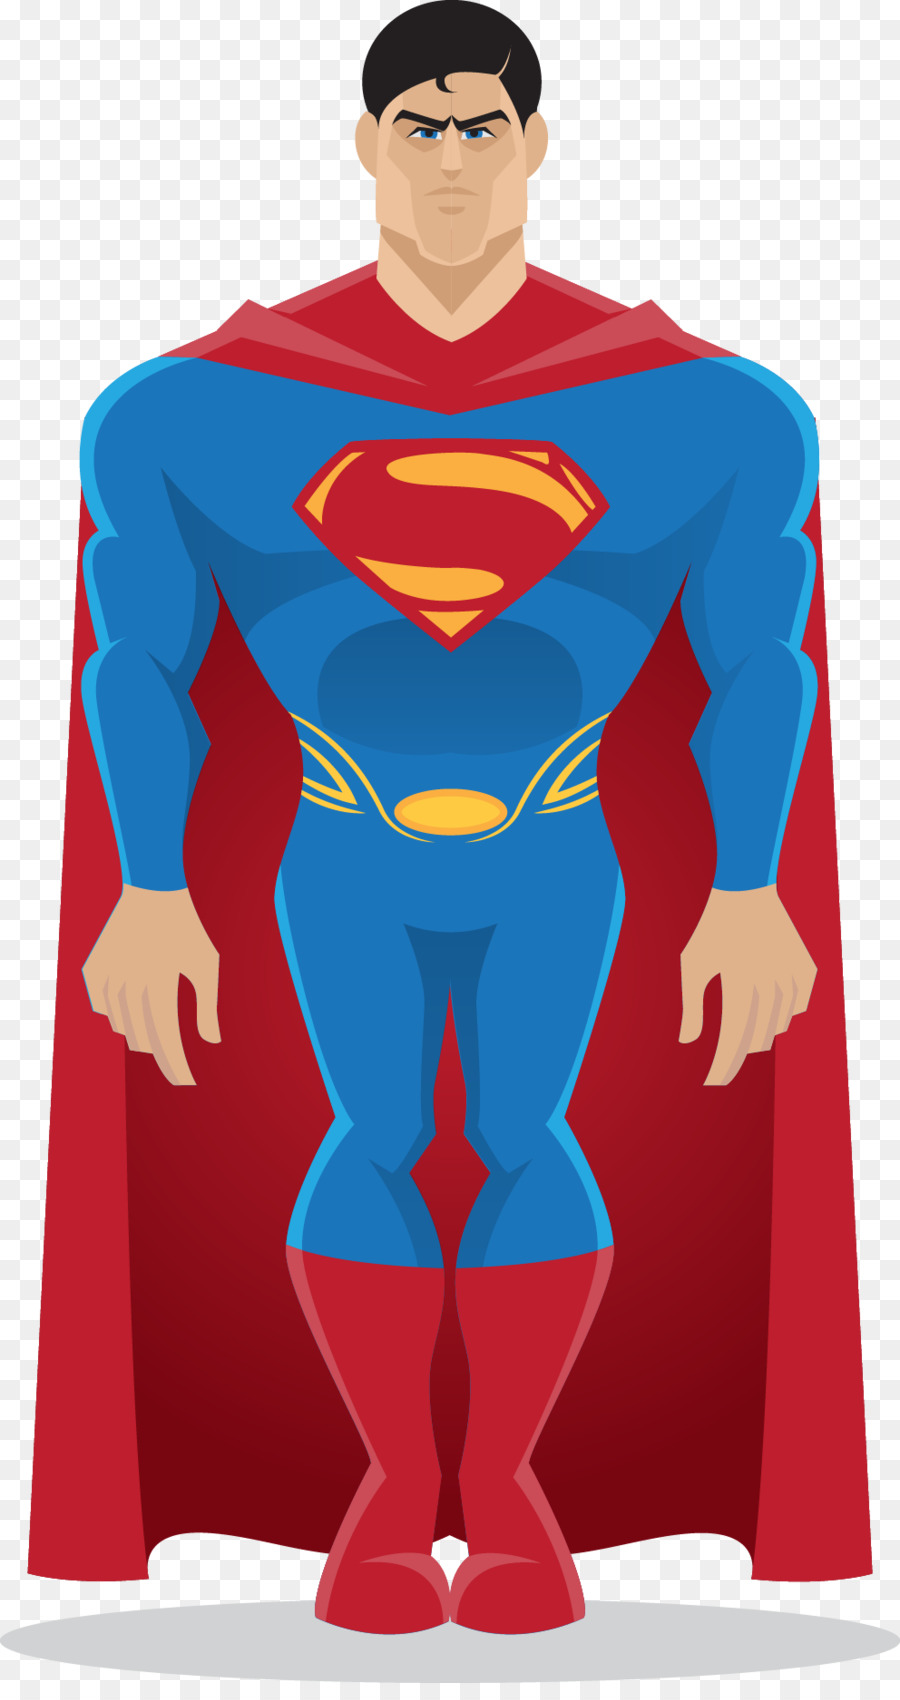 Clark Kent Batman Superhero Illustration - Superman png download - 992*1855 - Free Transparent Superman png Download.